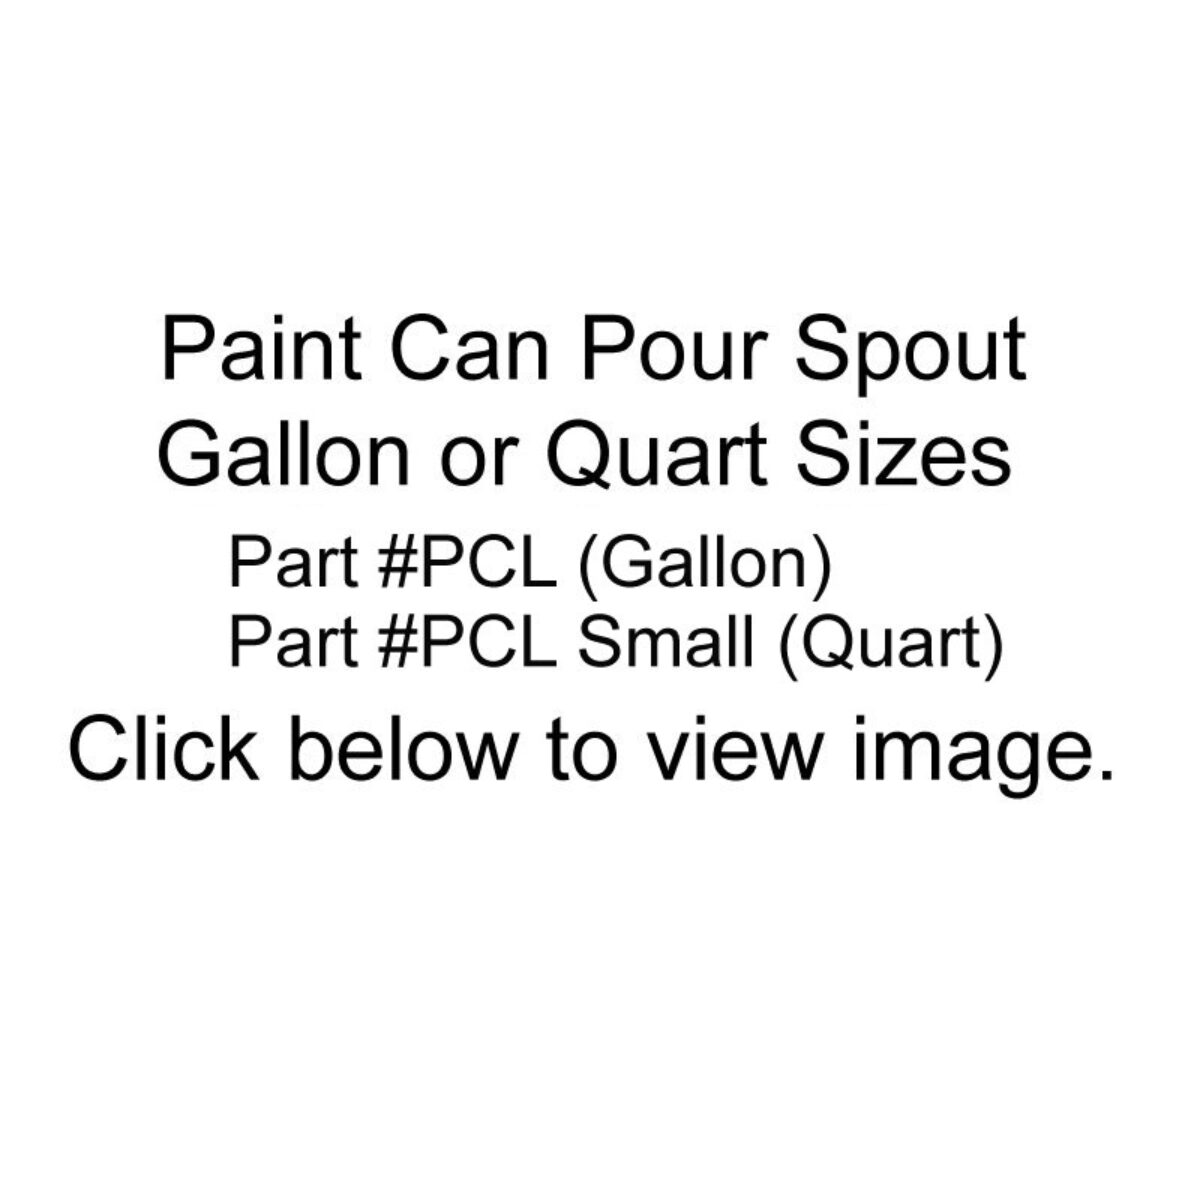 1 Gallon Pour Spout - Makes pouring liquids from gallon size cans easy.